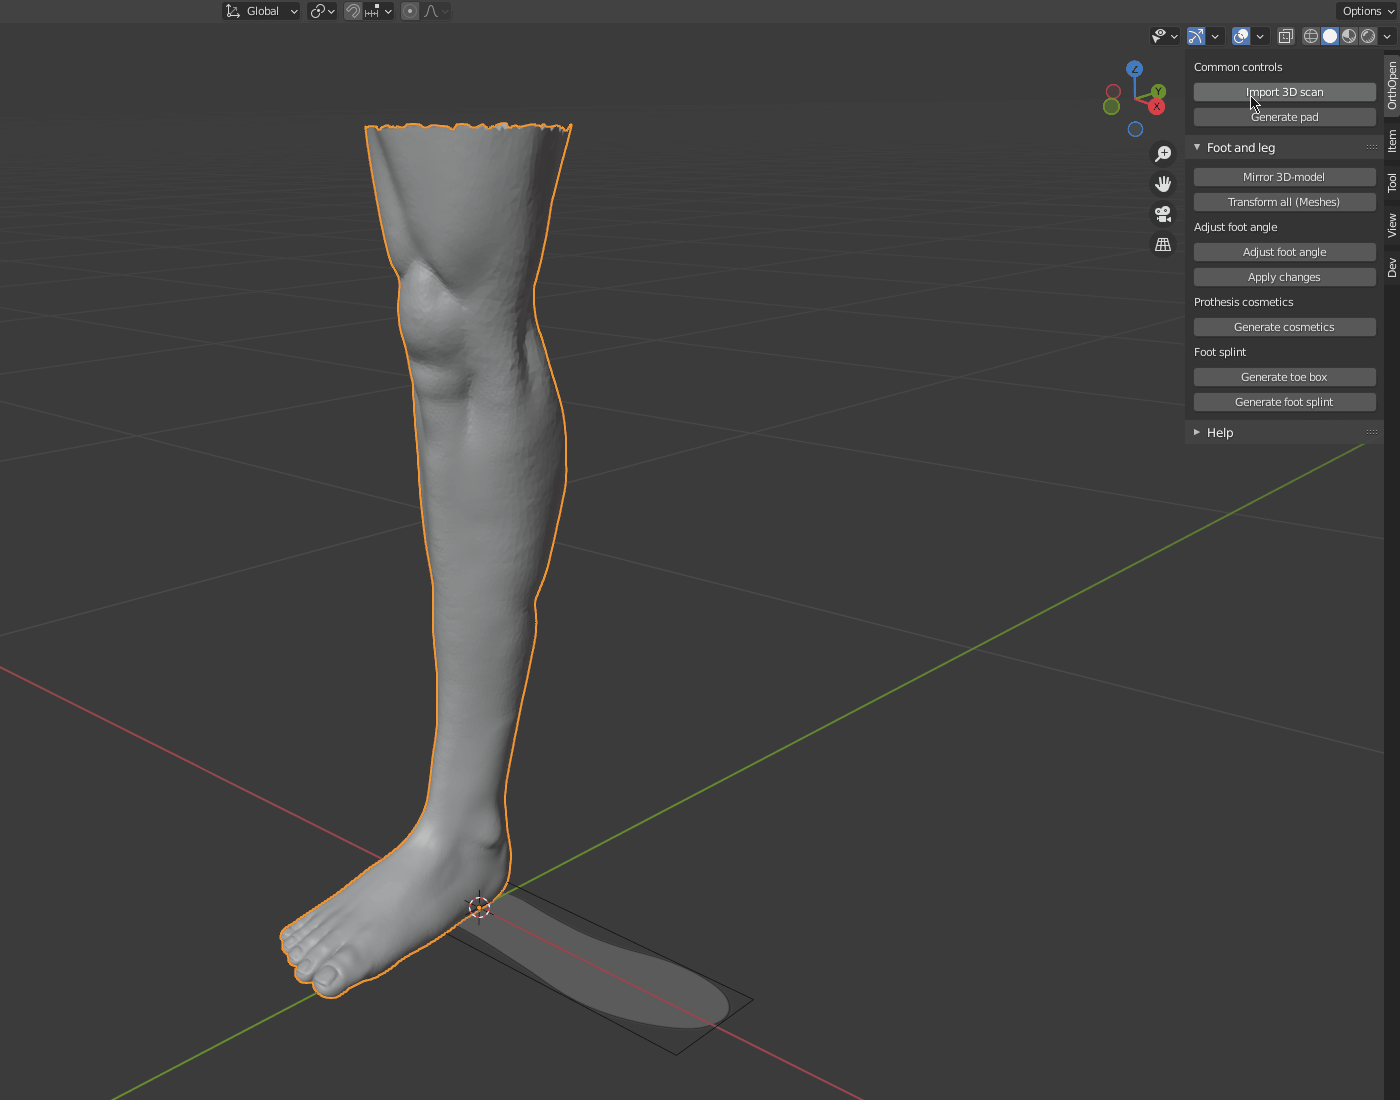 How to correct leg alignment